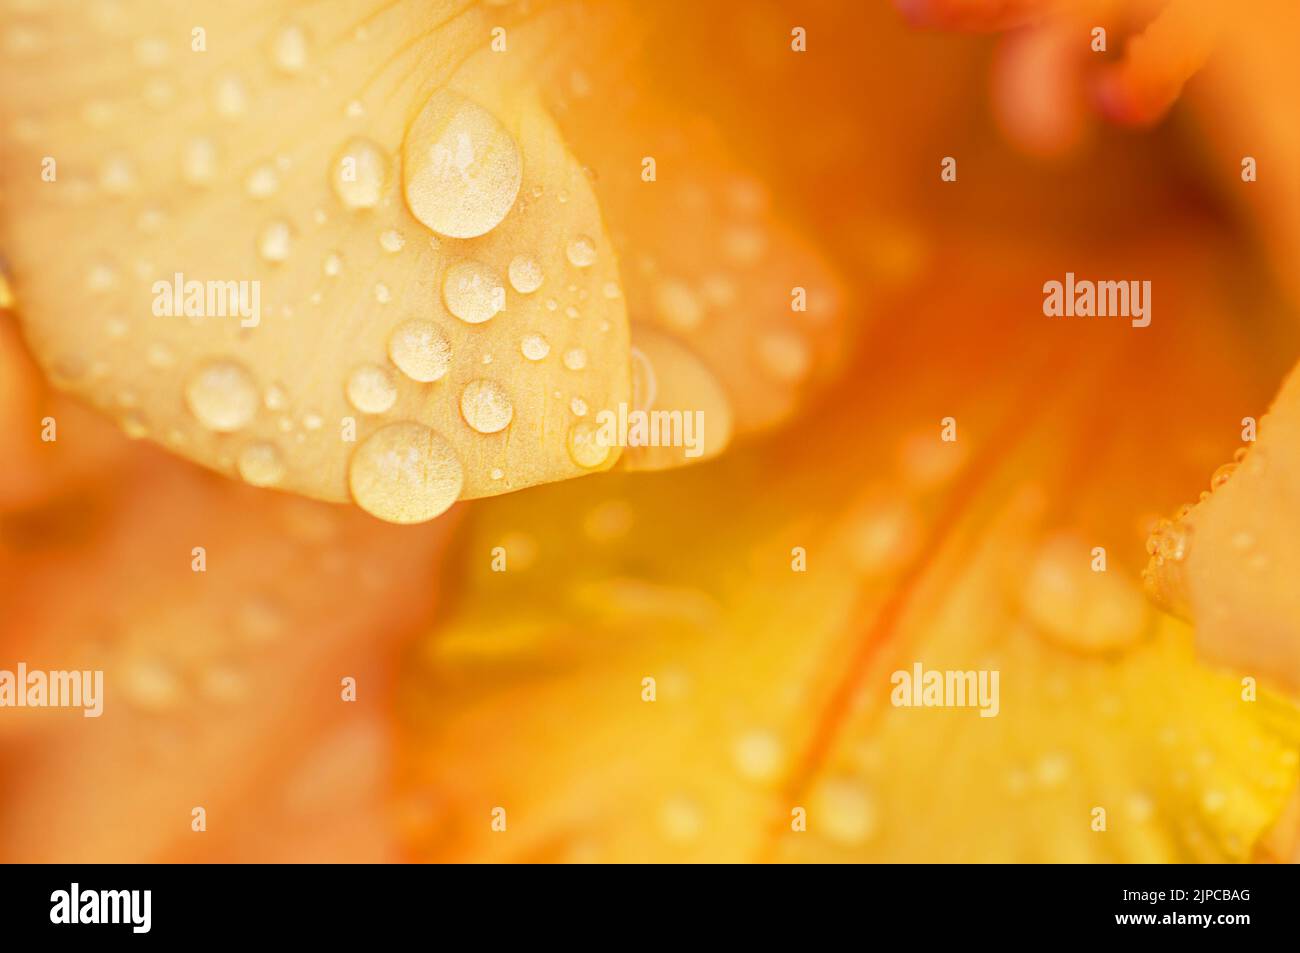 Orange gladiolus with raindrops, macro photo, abstract floral background Stock Photo